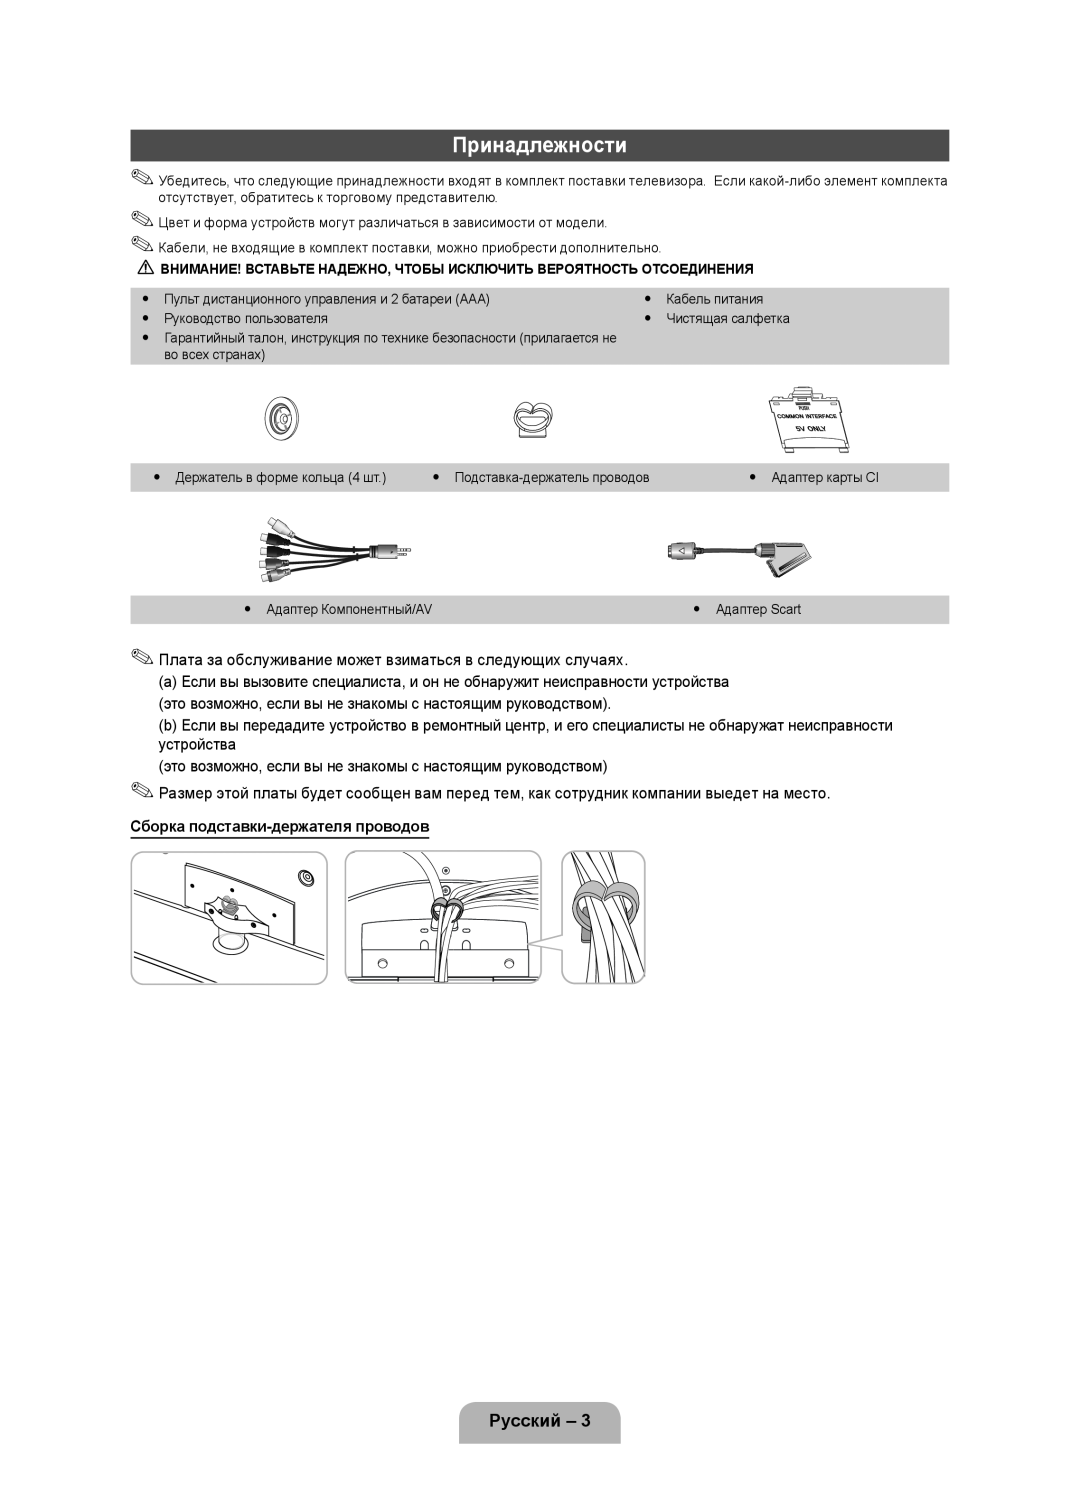 Samsung UE37D5000PWXBT, UE32D5000PWXZG, UE40D5000PWXZT manual Принадлежности, Русский, Сборка подставки-держателя проводов 